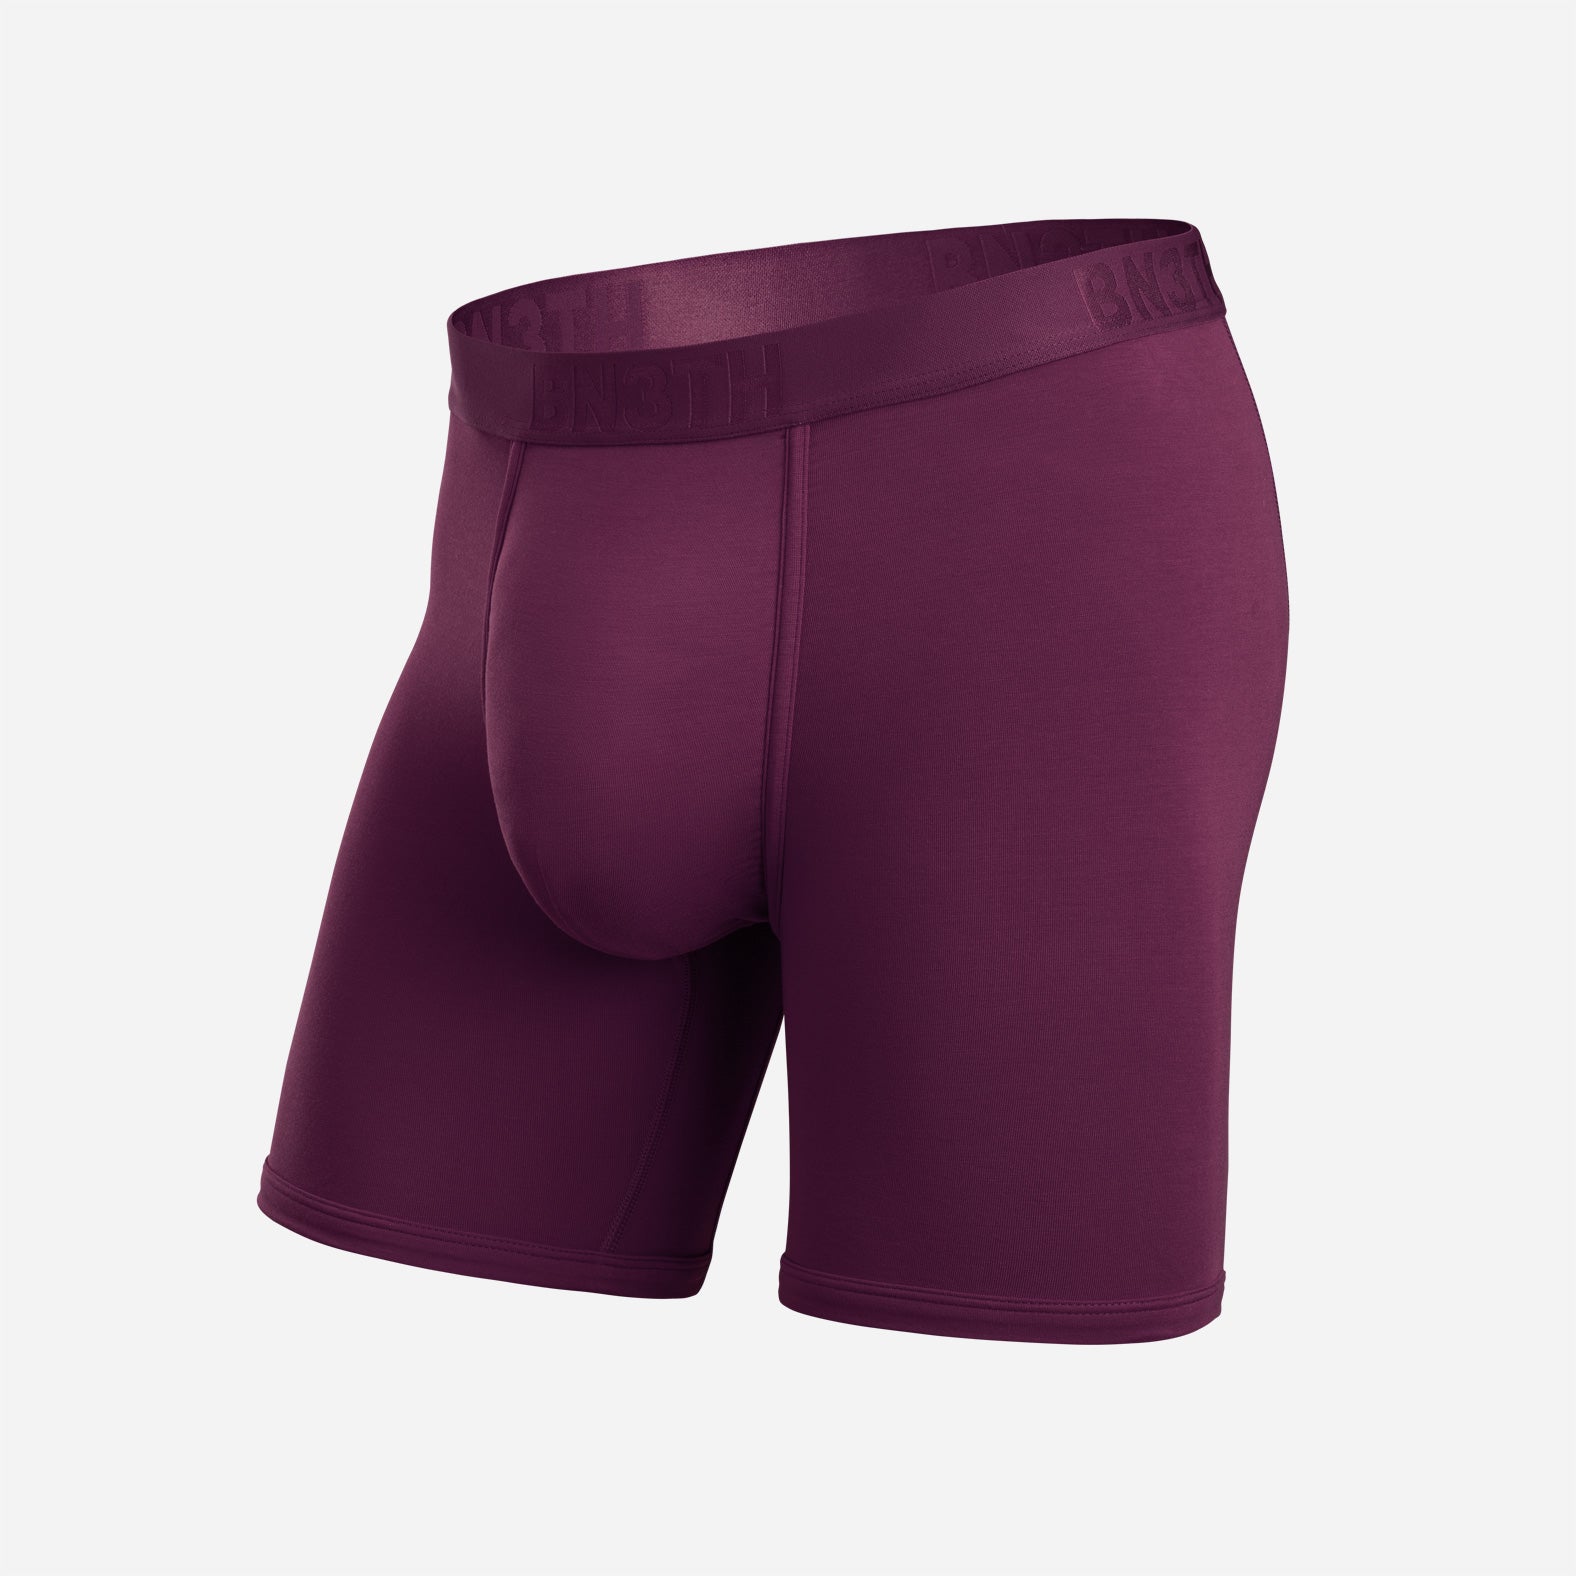 BN3TH Mens Boxer Briefs 3D Support Pouch Modal Underwear